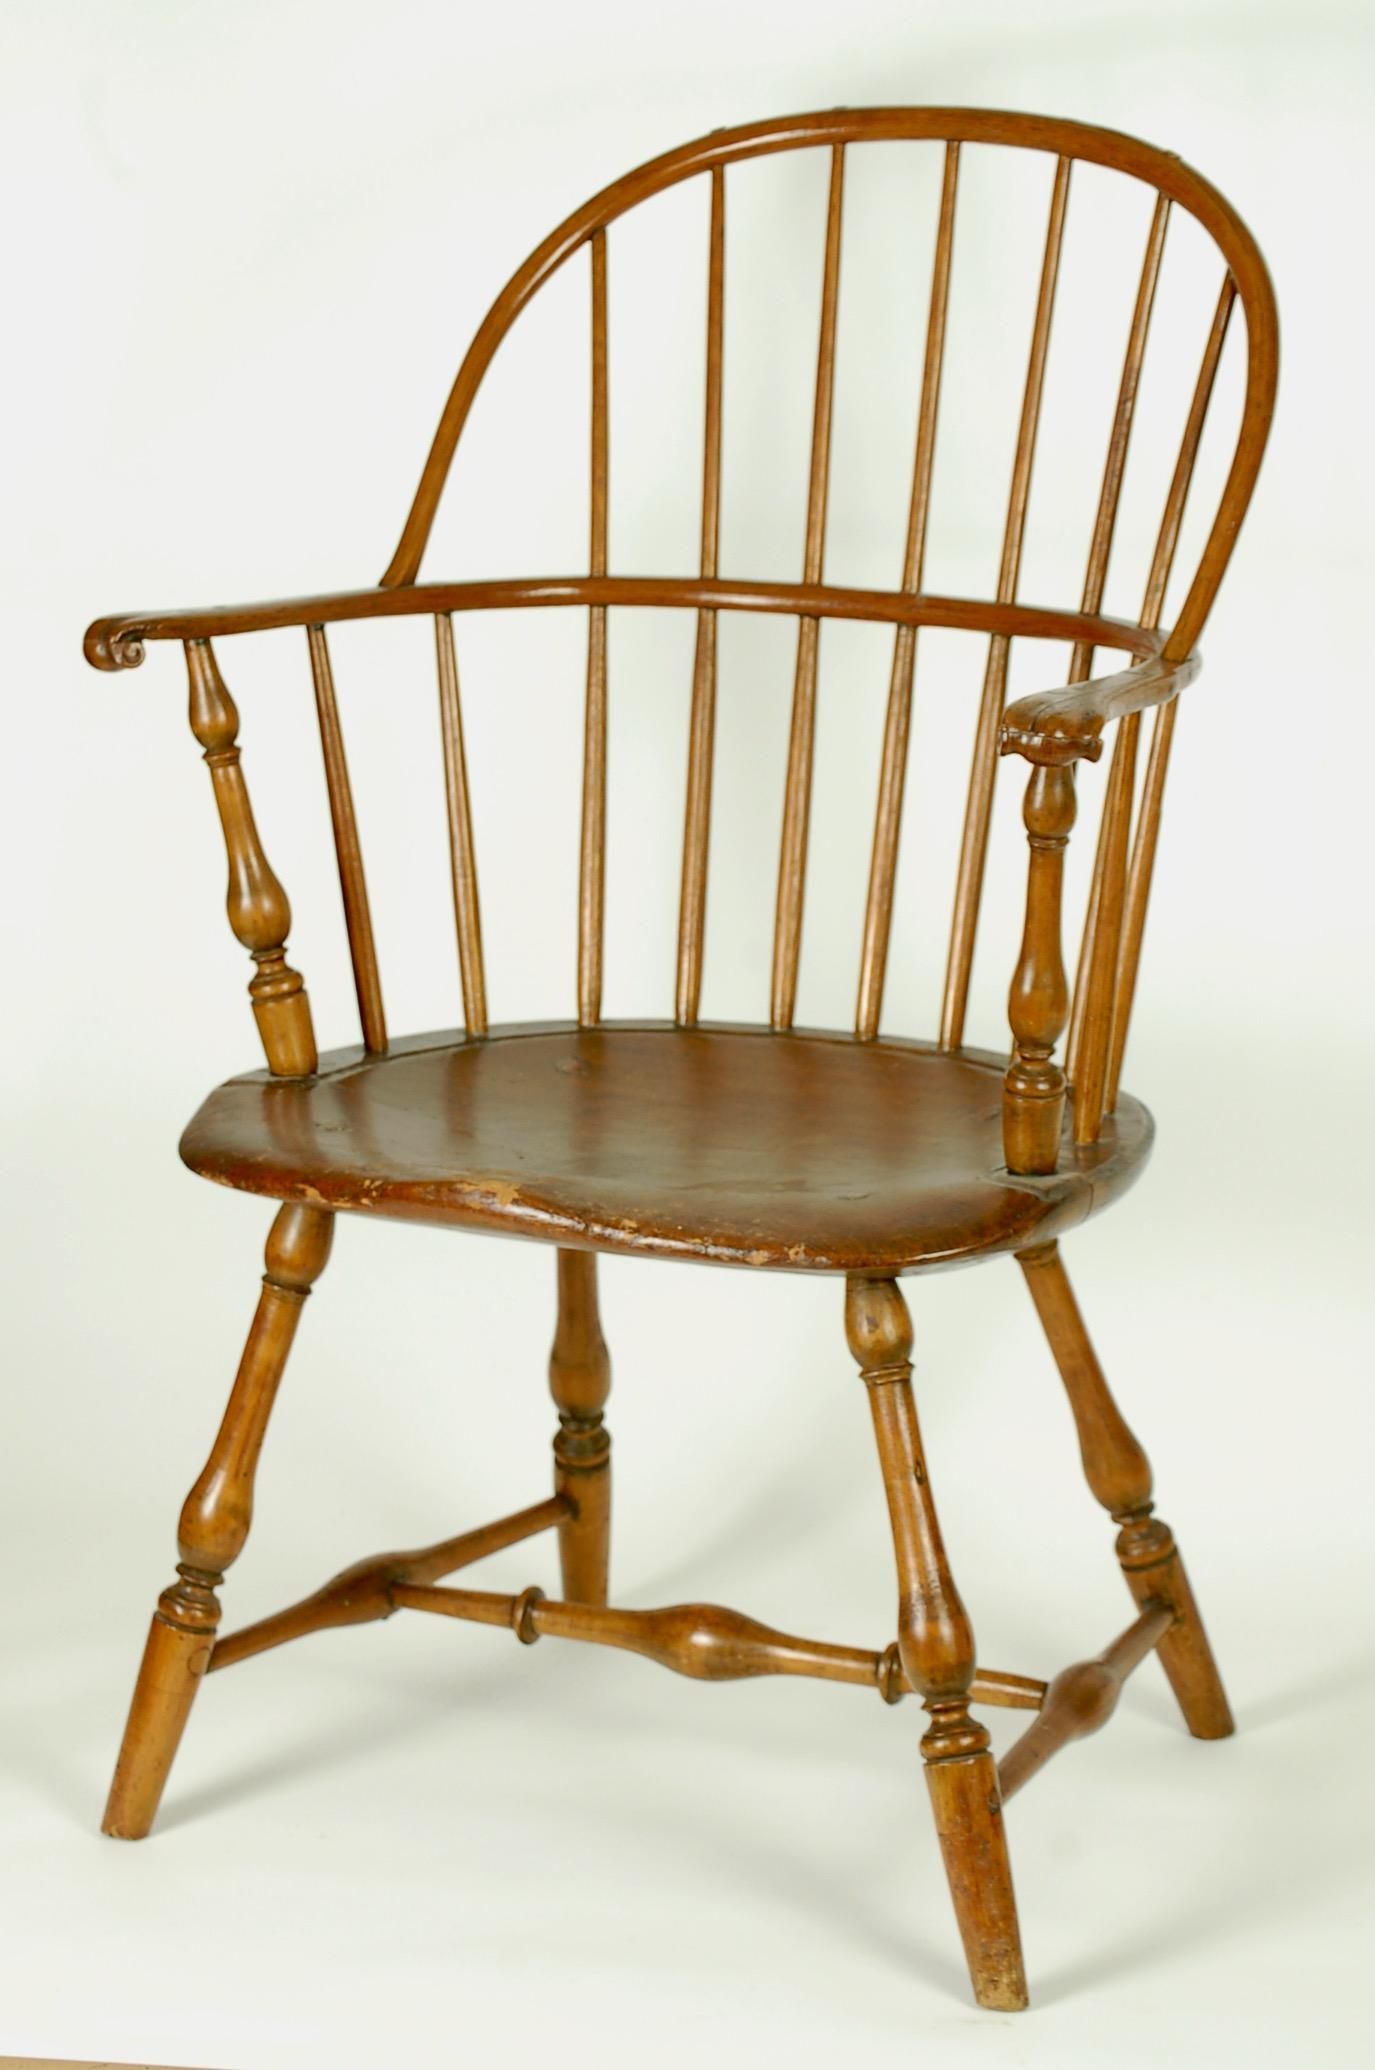 Sack-back Windsor chair